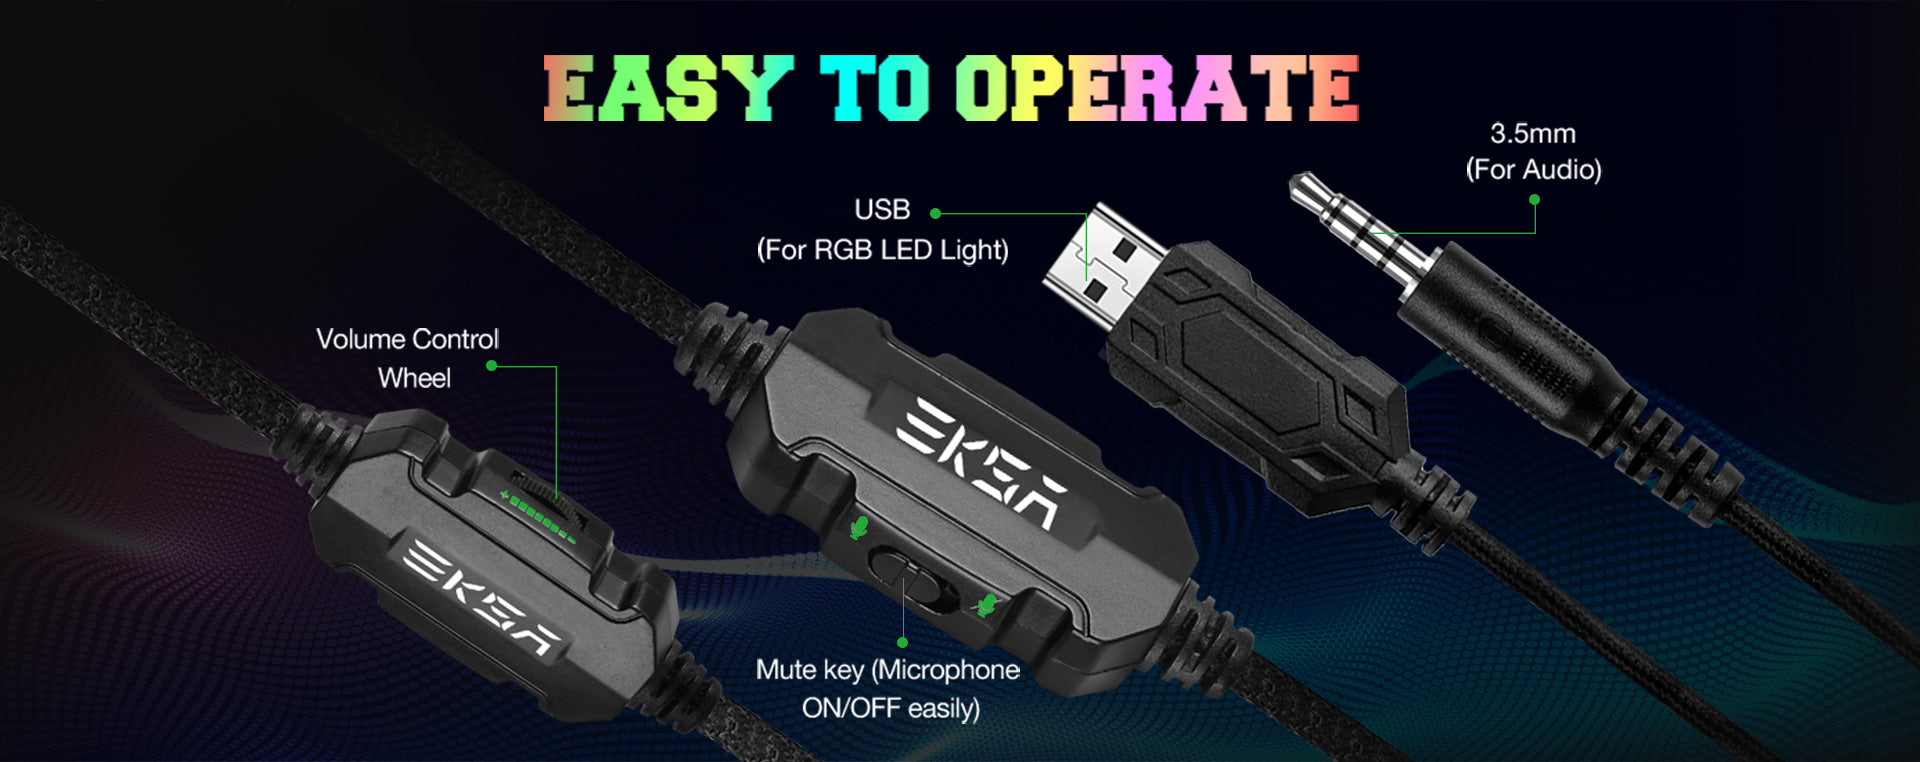 EKSA E1000S 3.5mm Stereo RGB Gaming Headset